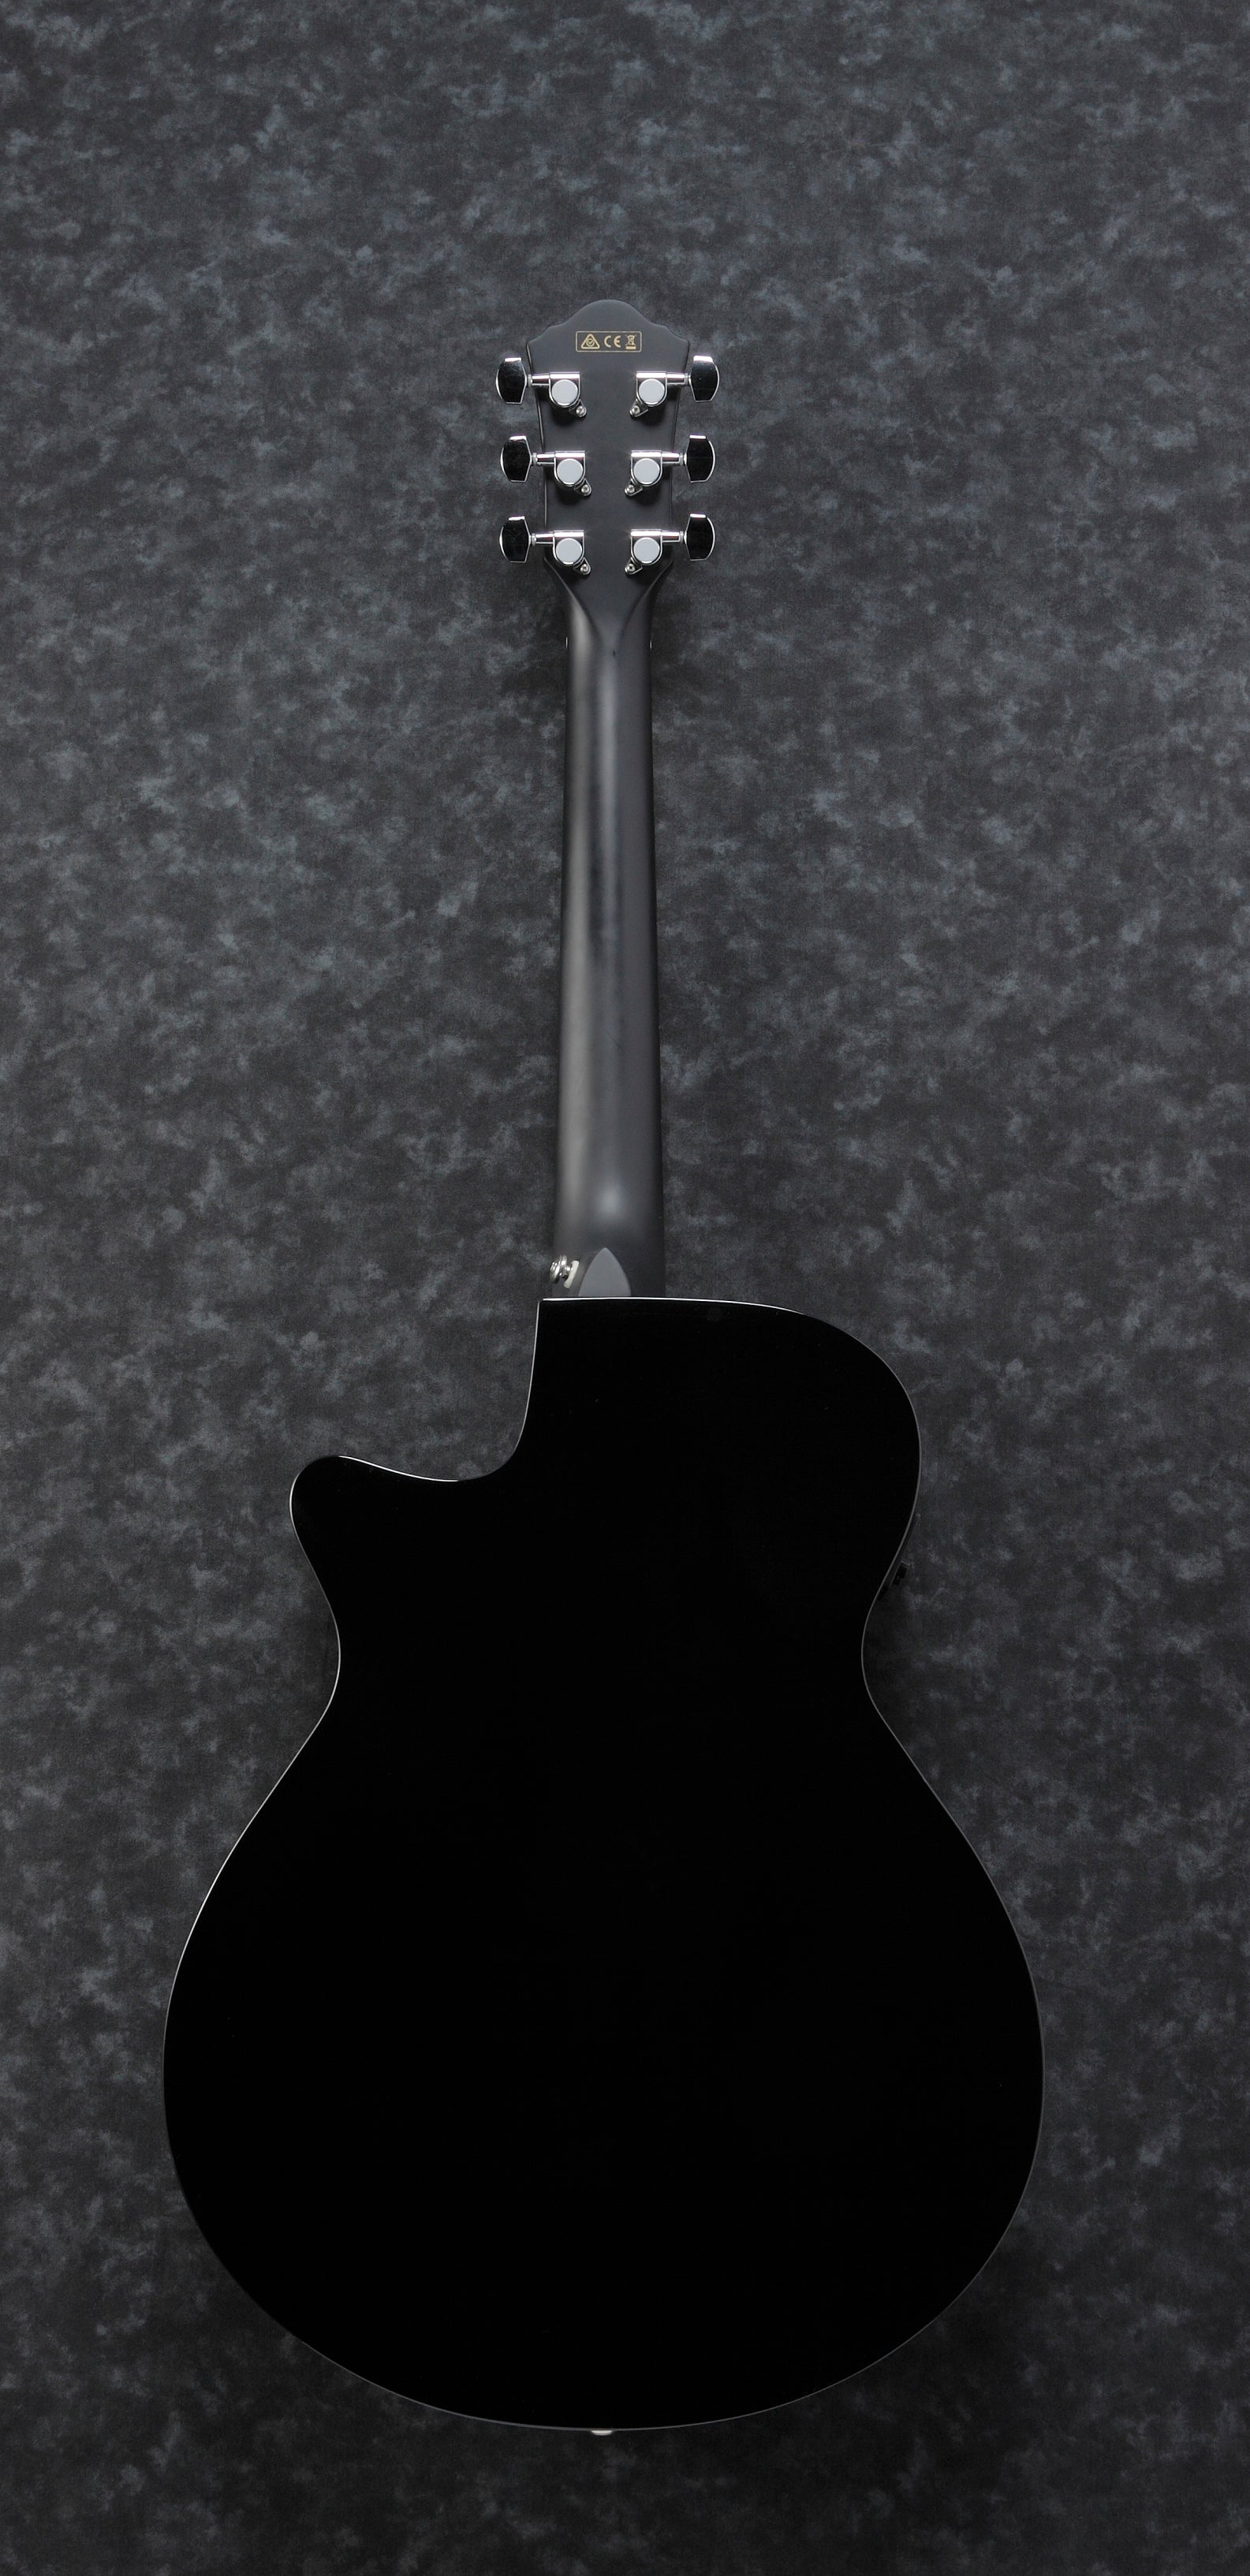 Ibanez AEG50 Acoustic Guitar - Black High Gloss木結他